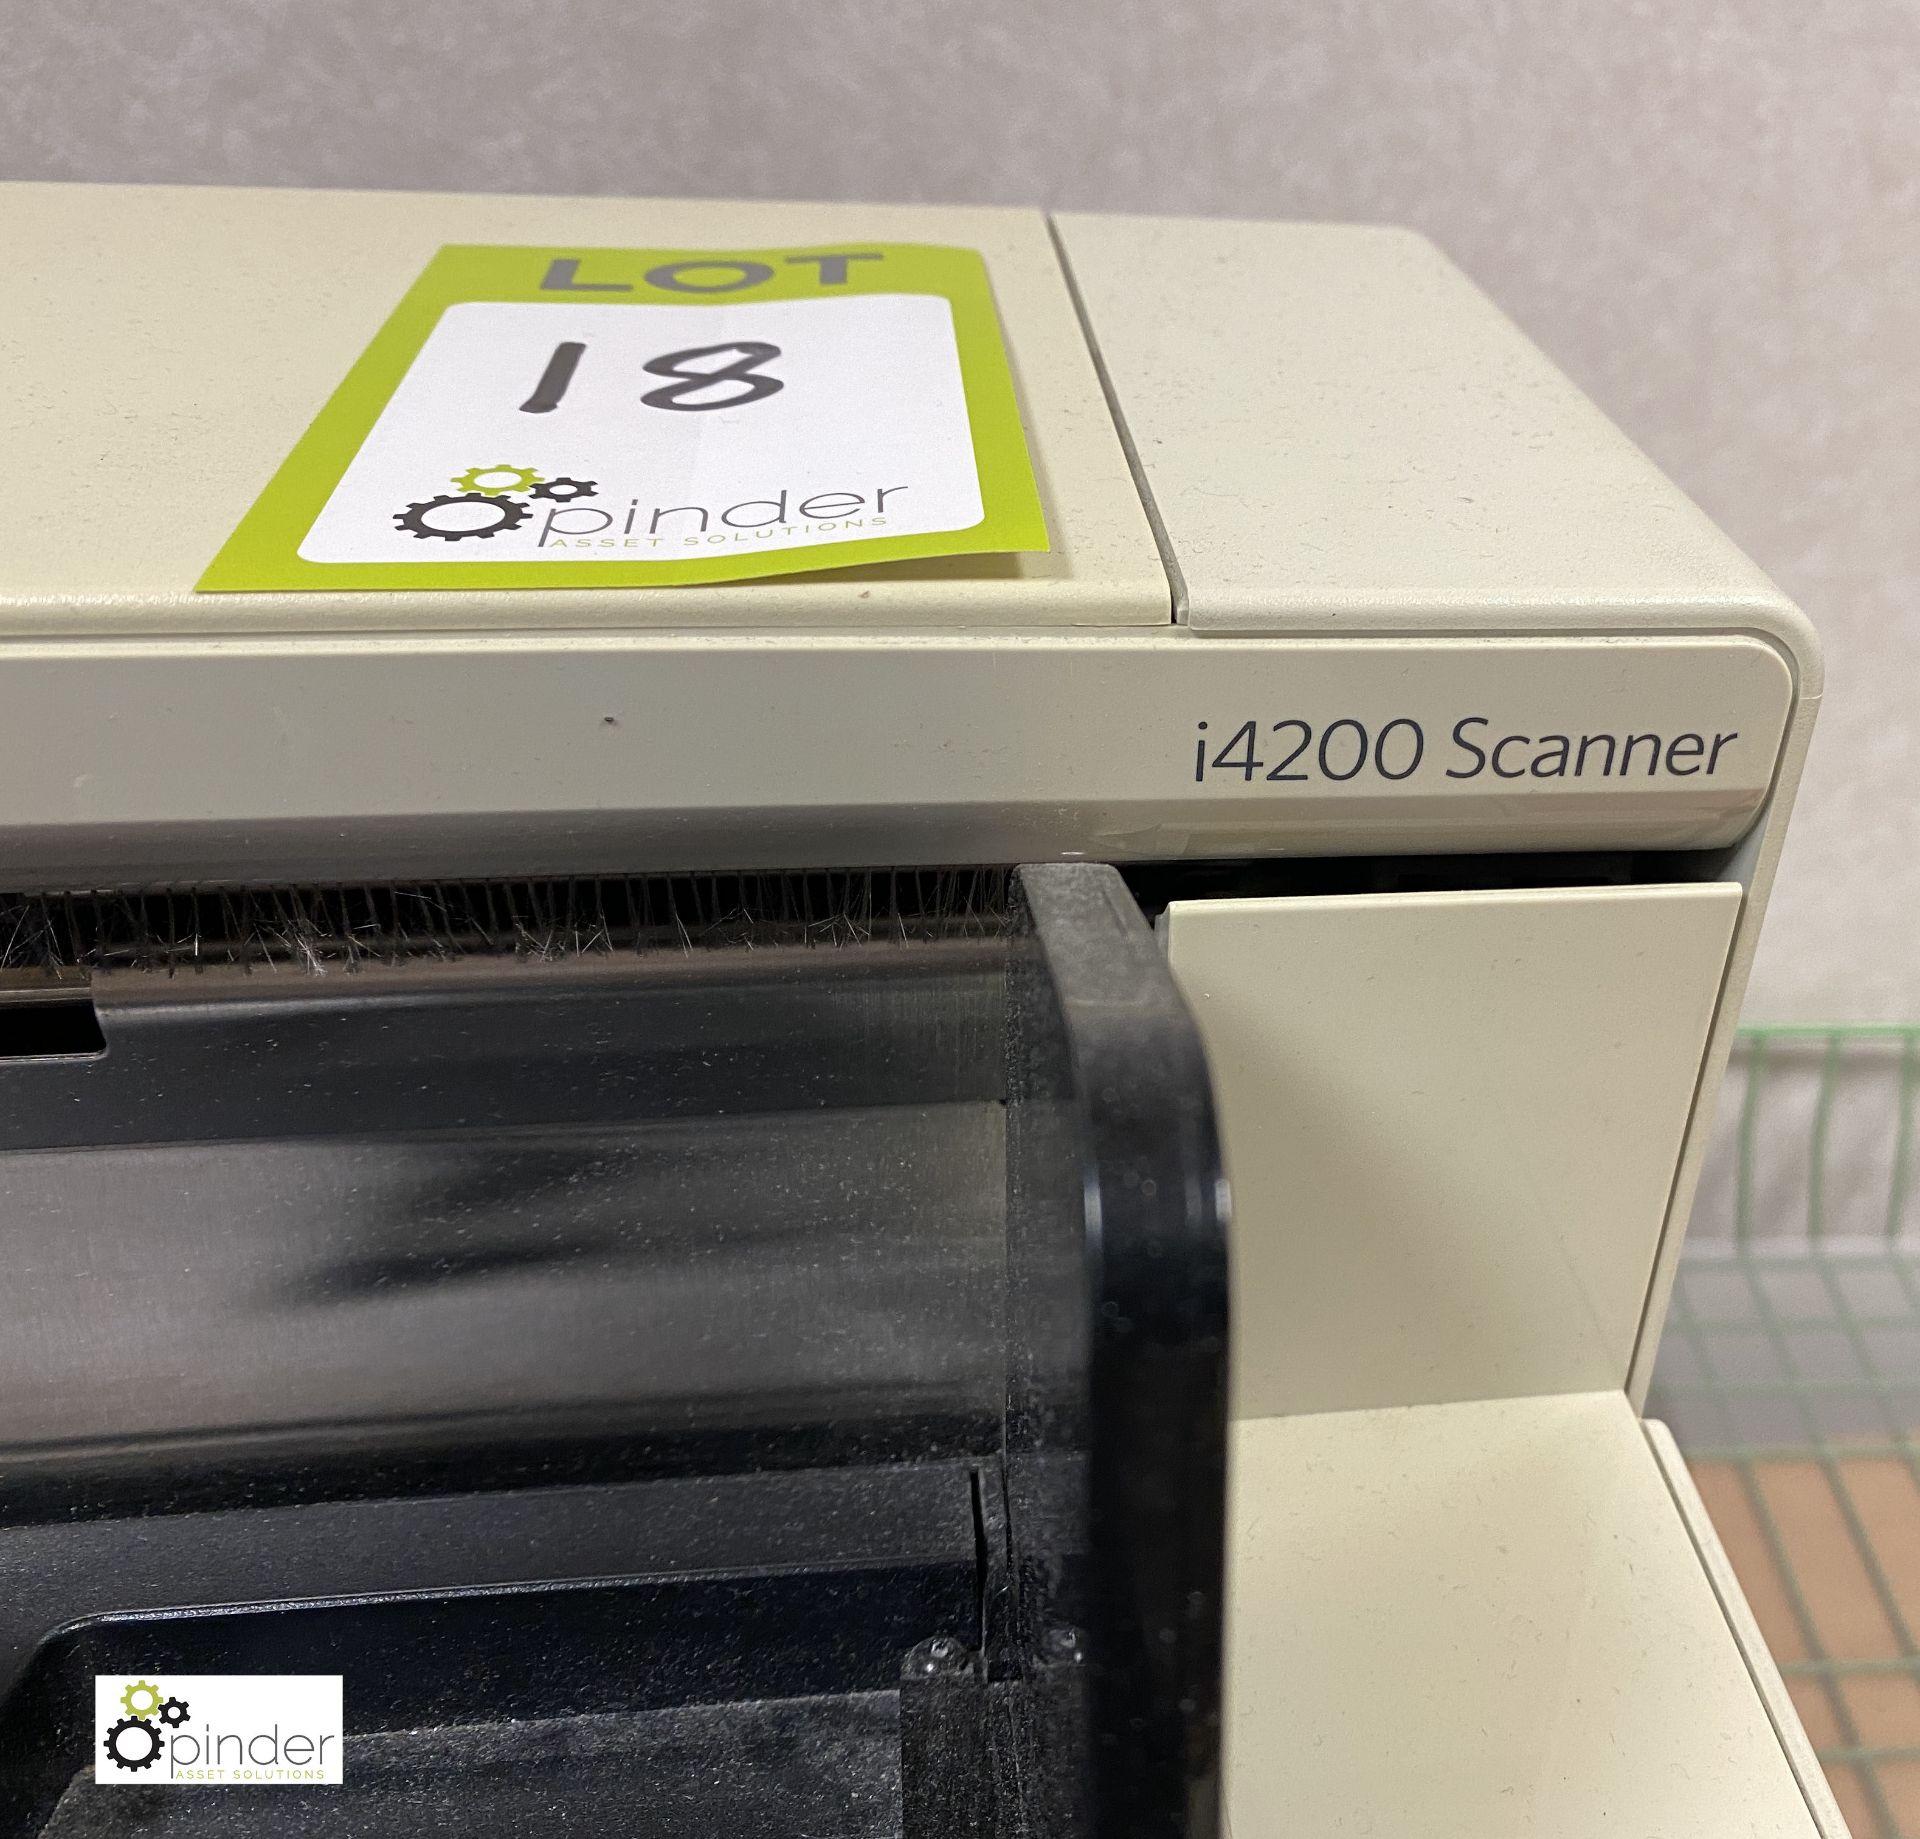 Kodak i4200 Professional Scanner - Image 6 of 6